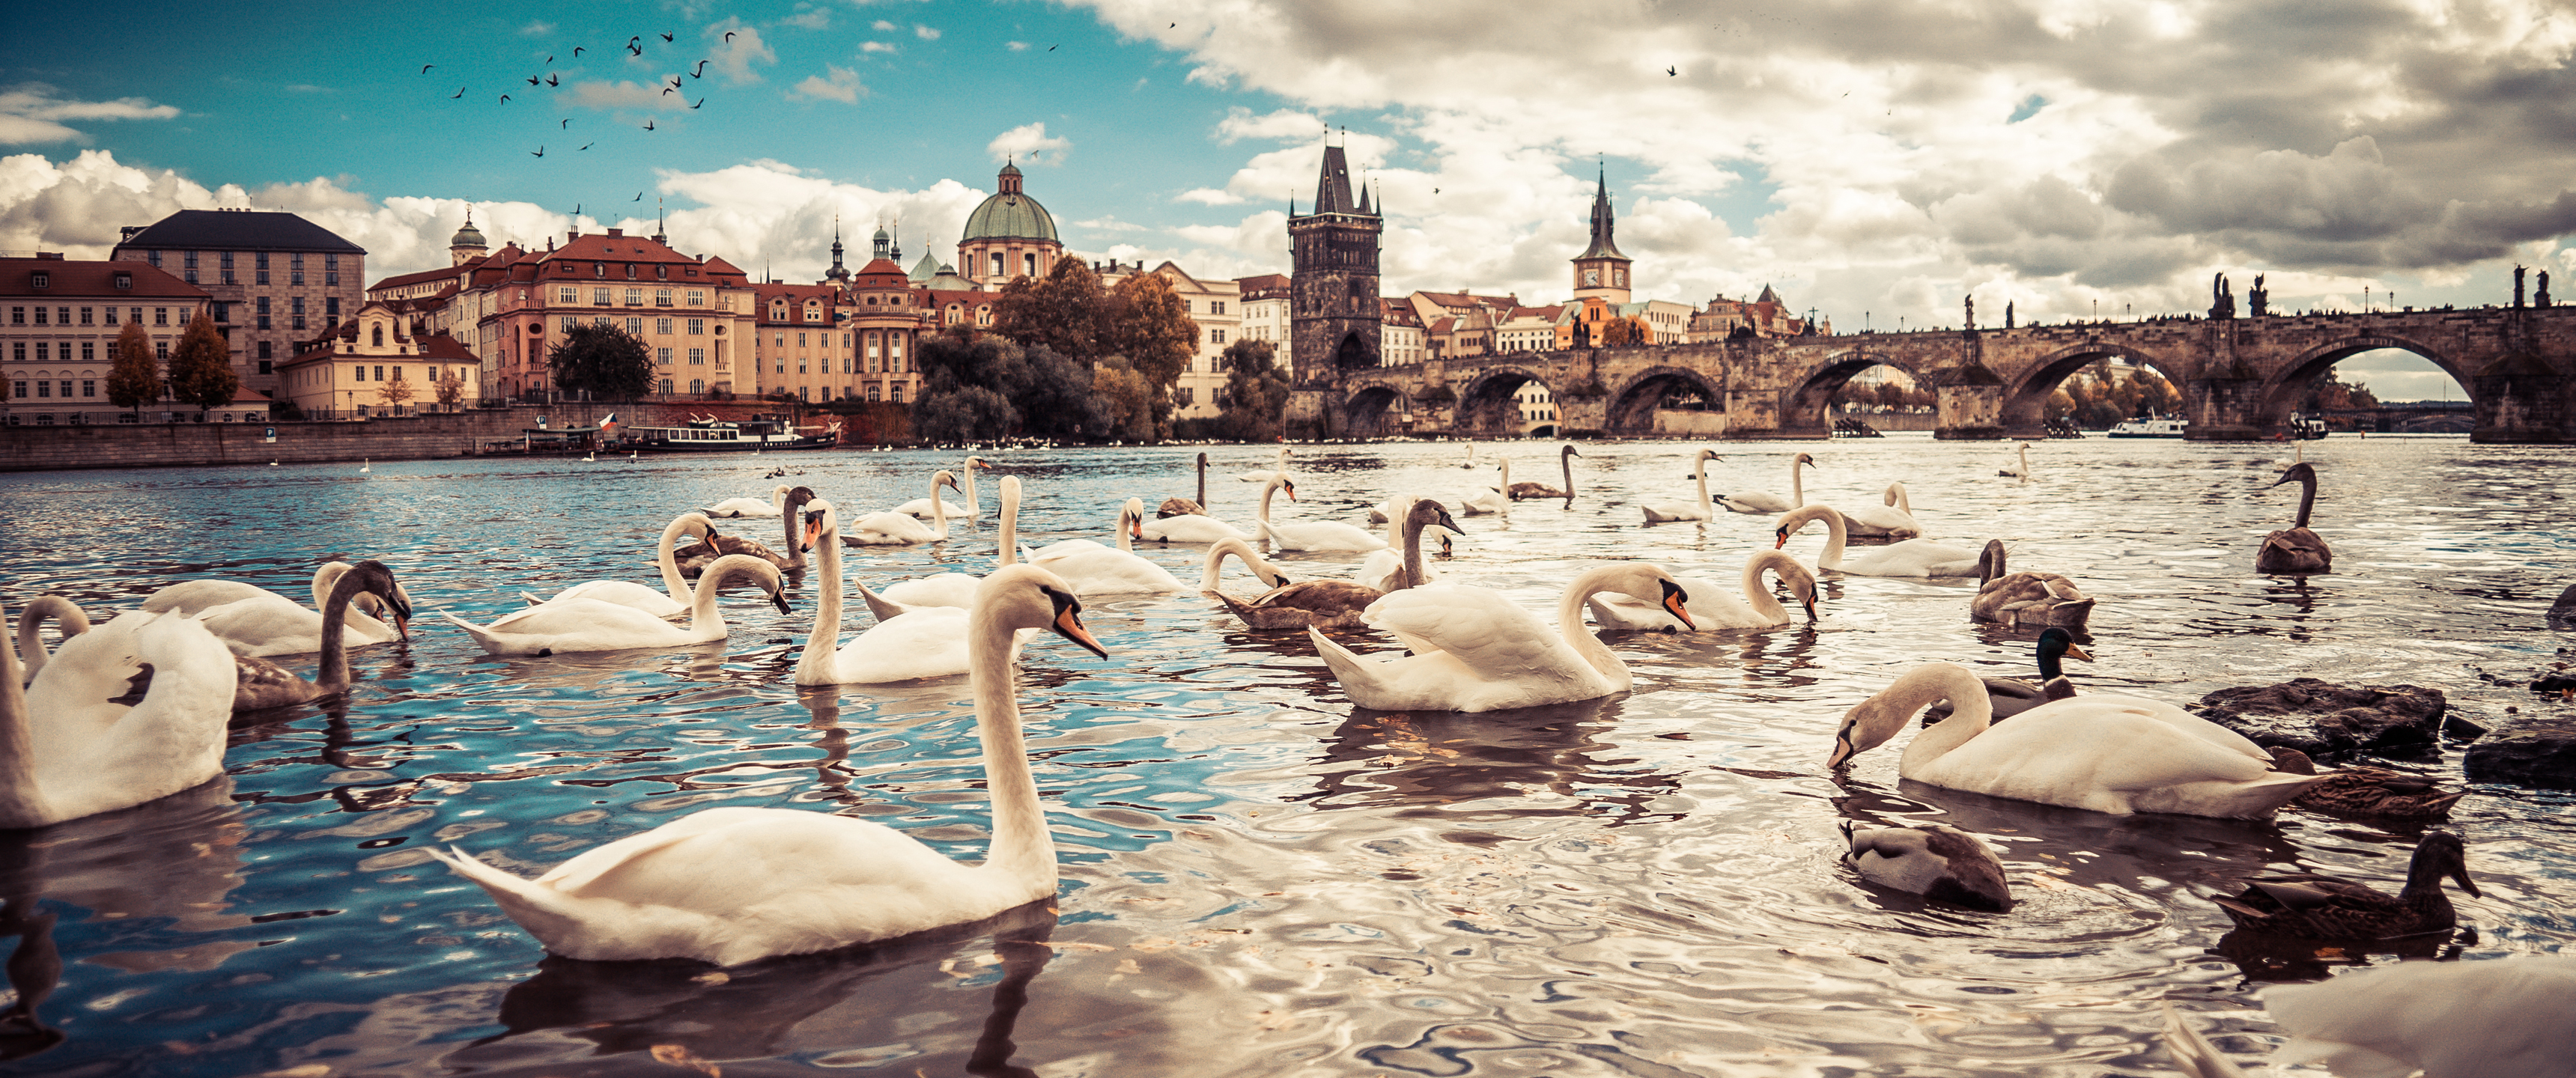 General 3440x1440 Prague Czech Republic swans animals cityscape river geese blue panorama